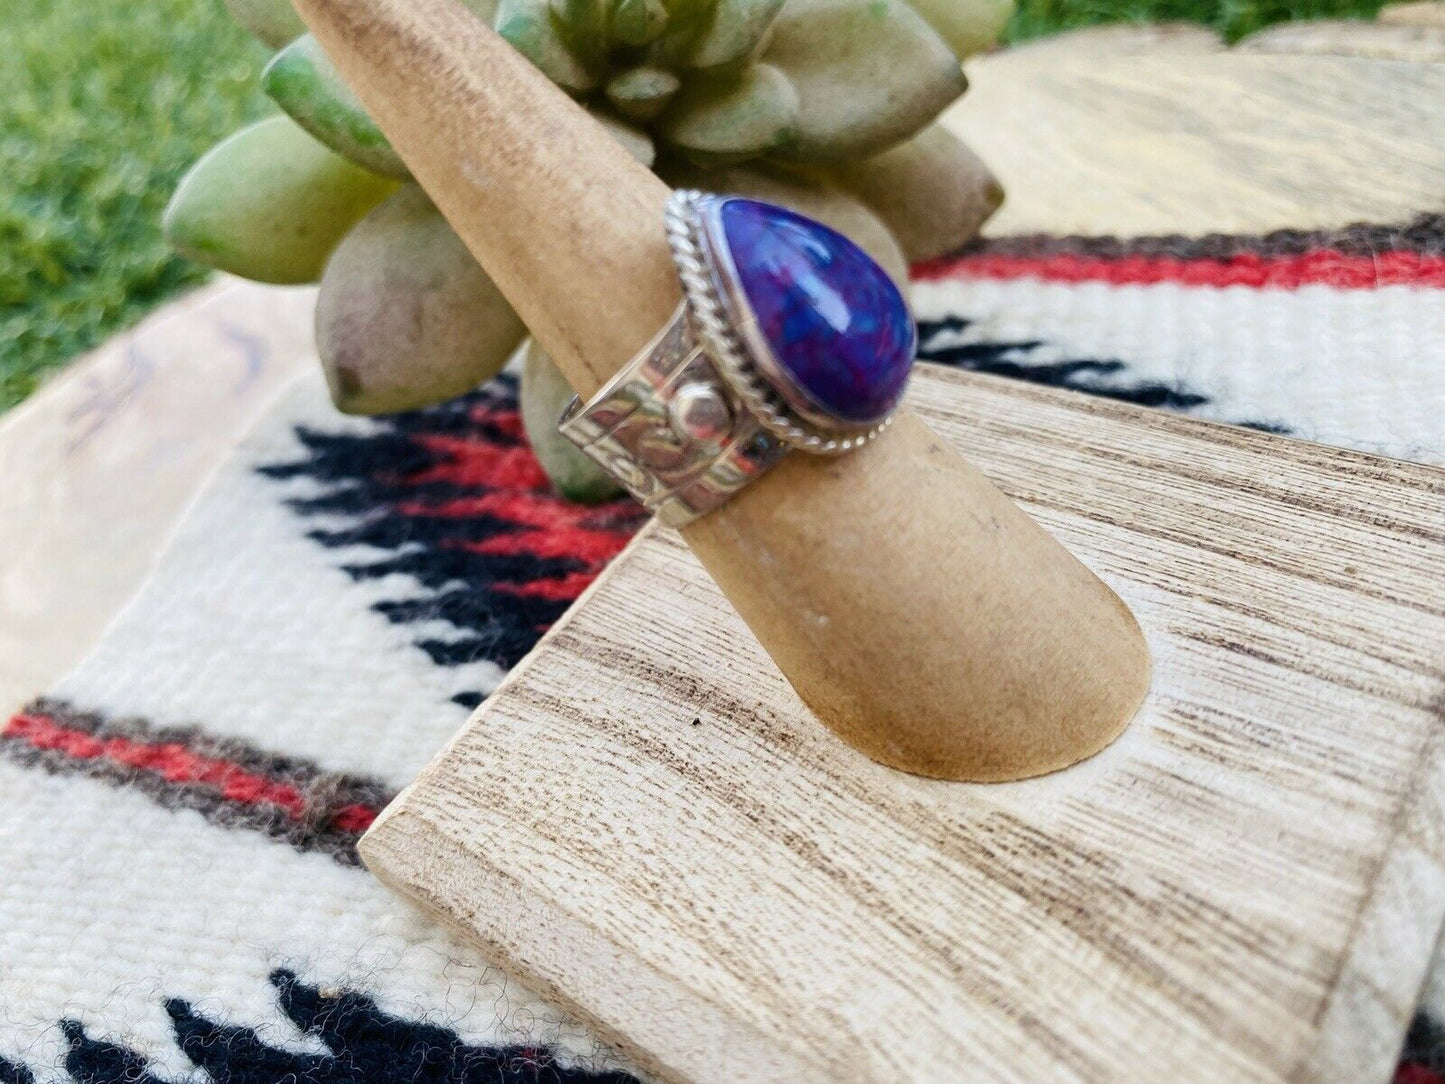 Navajo Purple Kingman Turquoise & Sterling Silver Ring Size 5.5